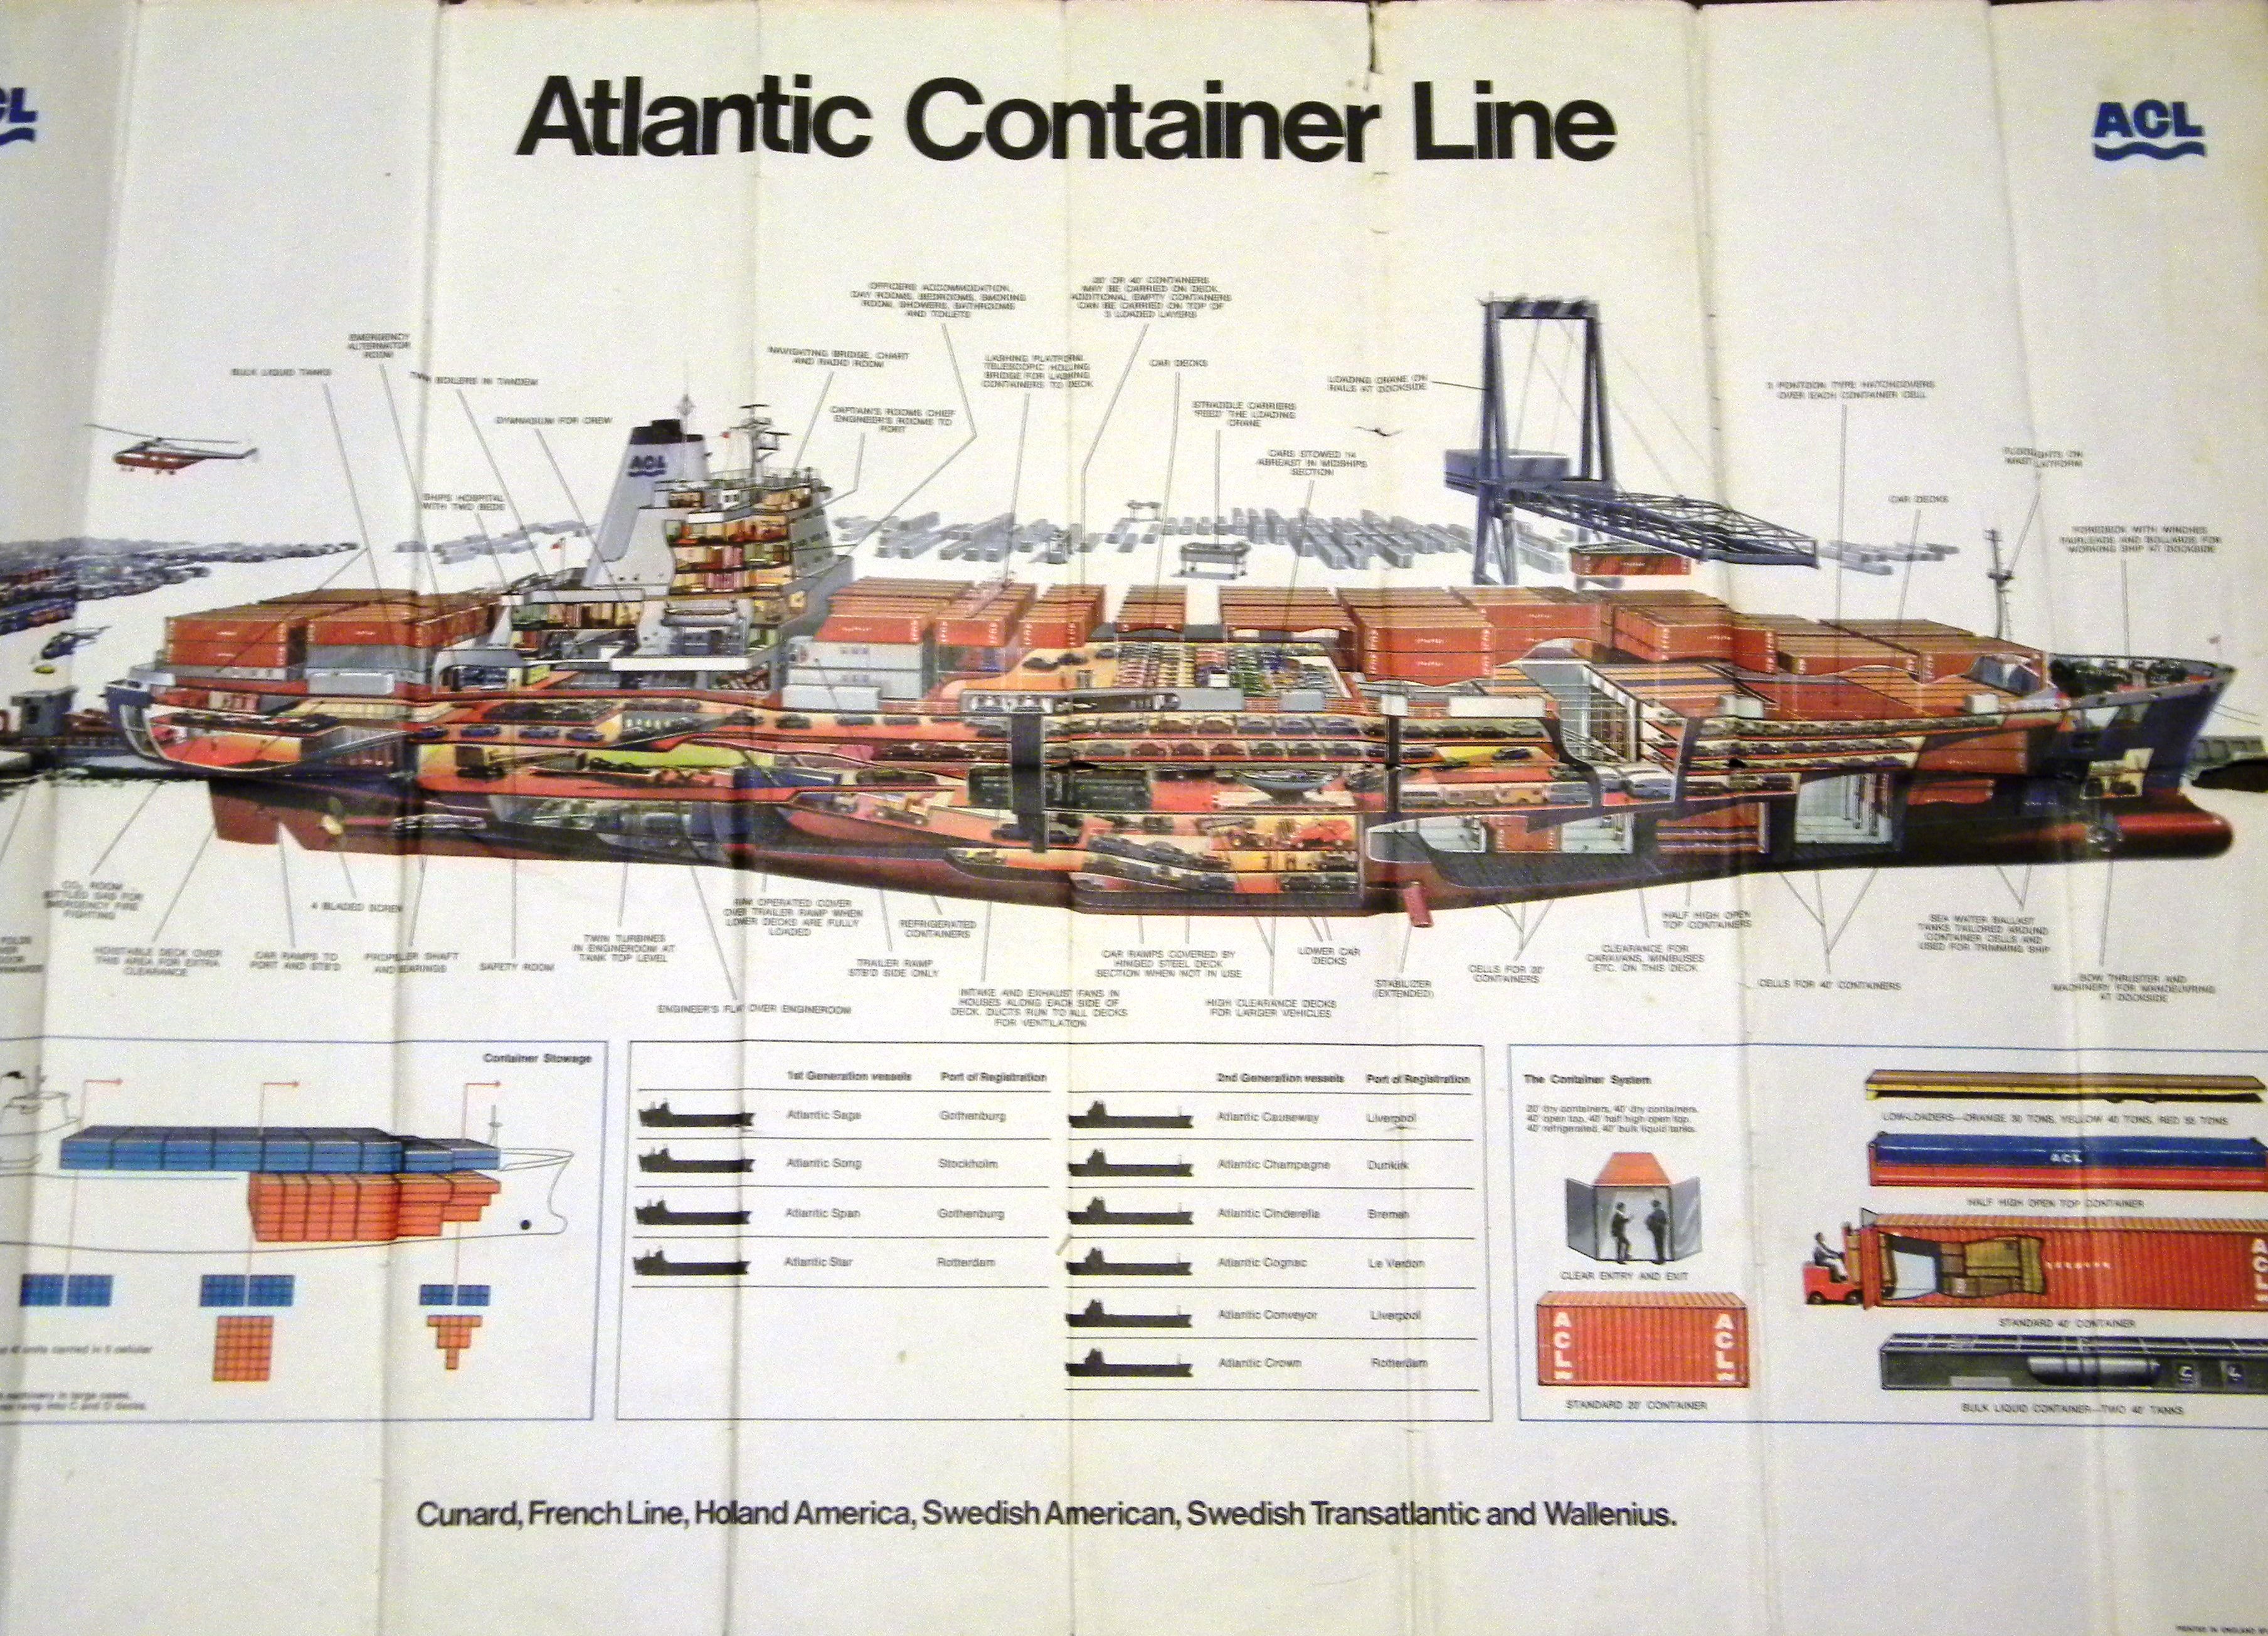 Ss Atlantic Conveyor Wallpapers